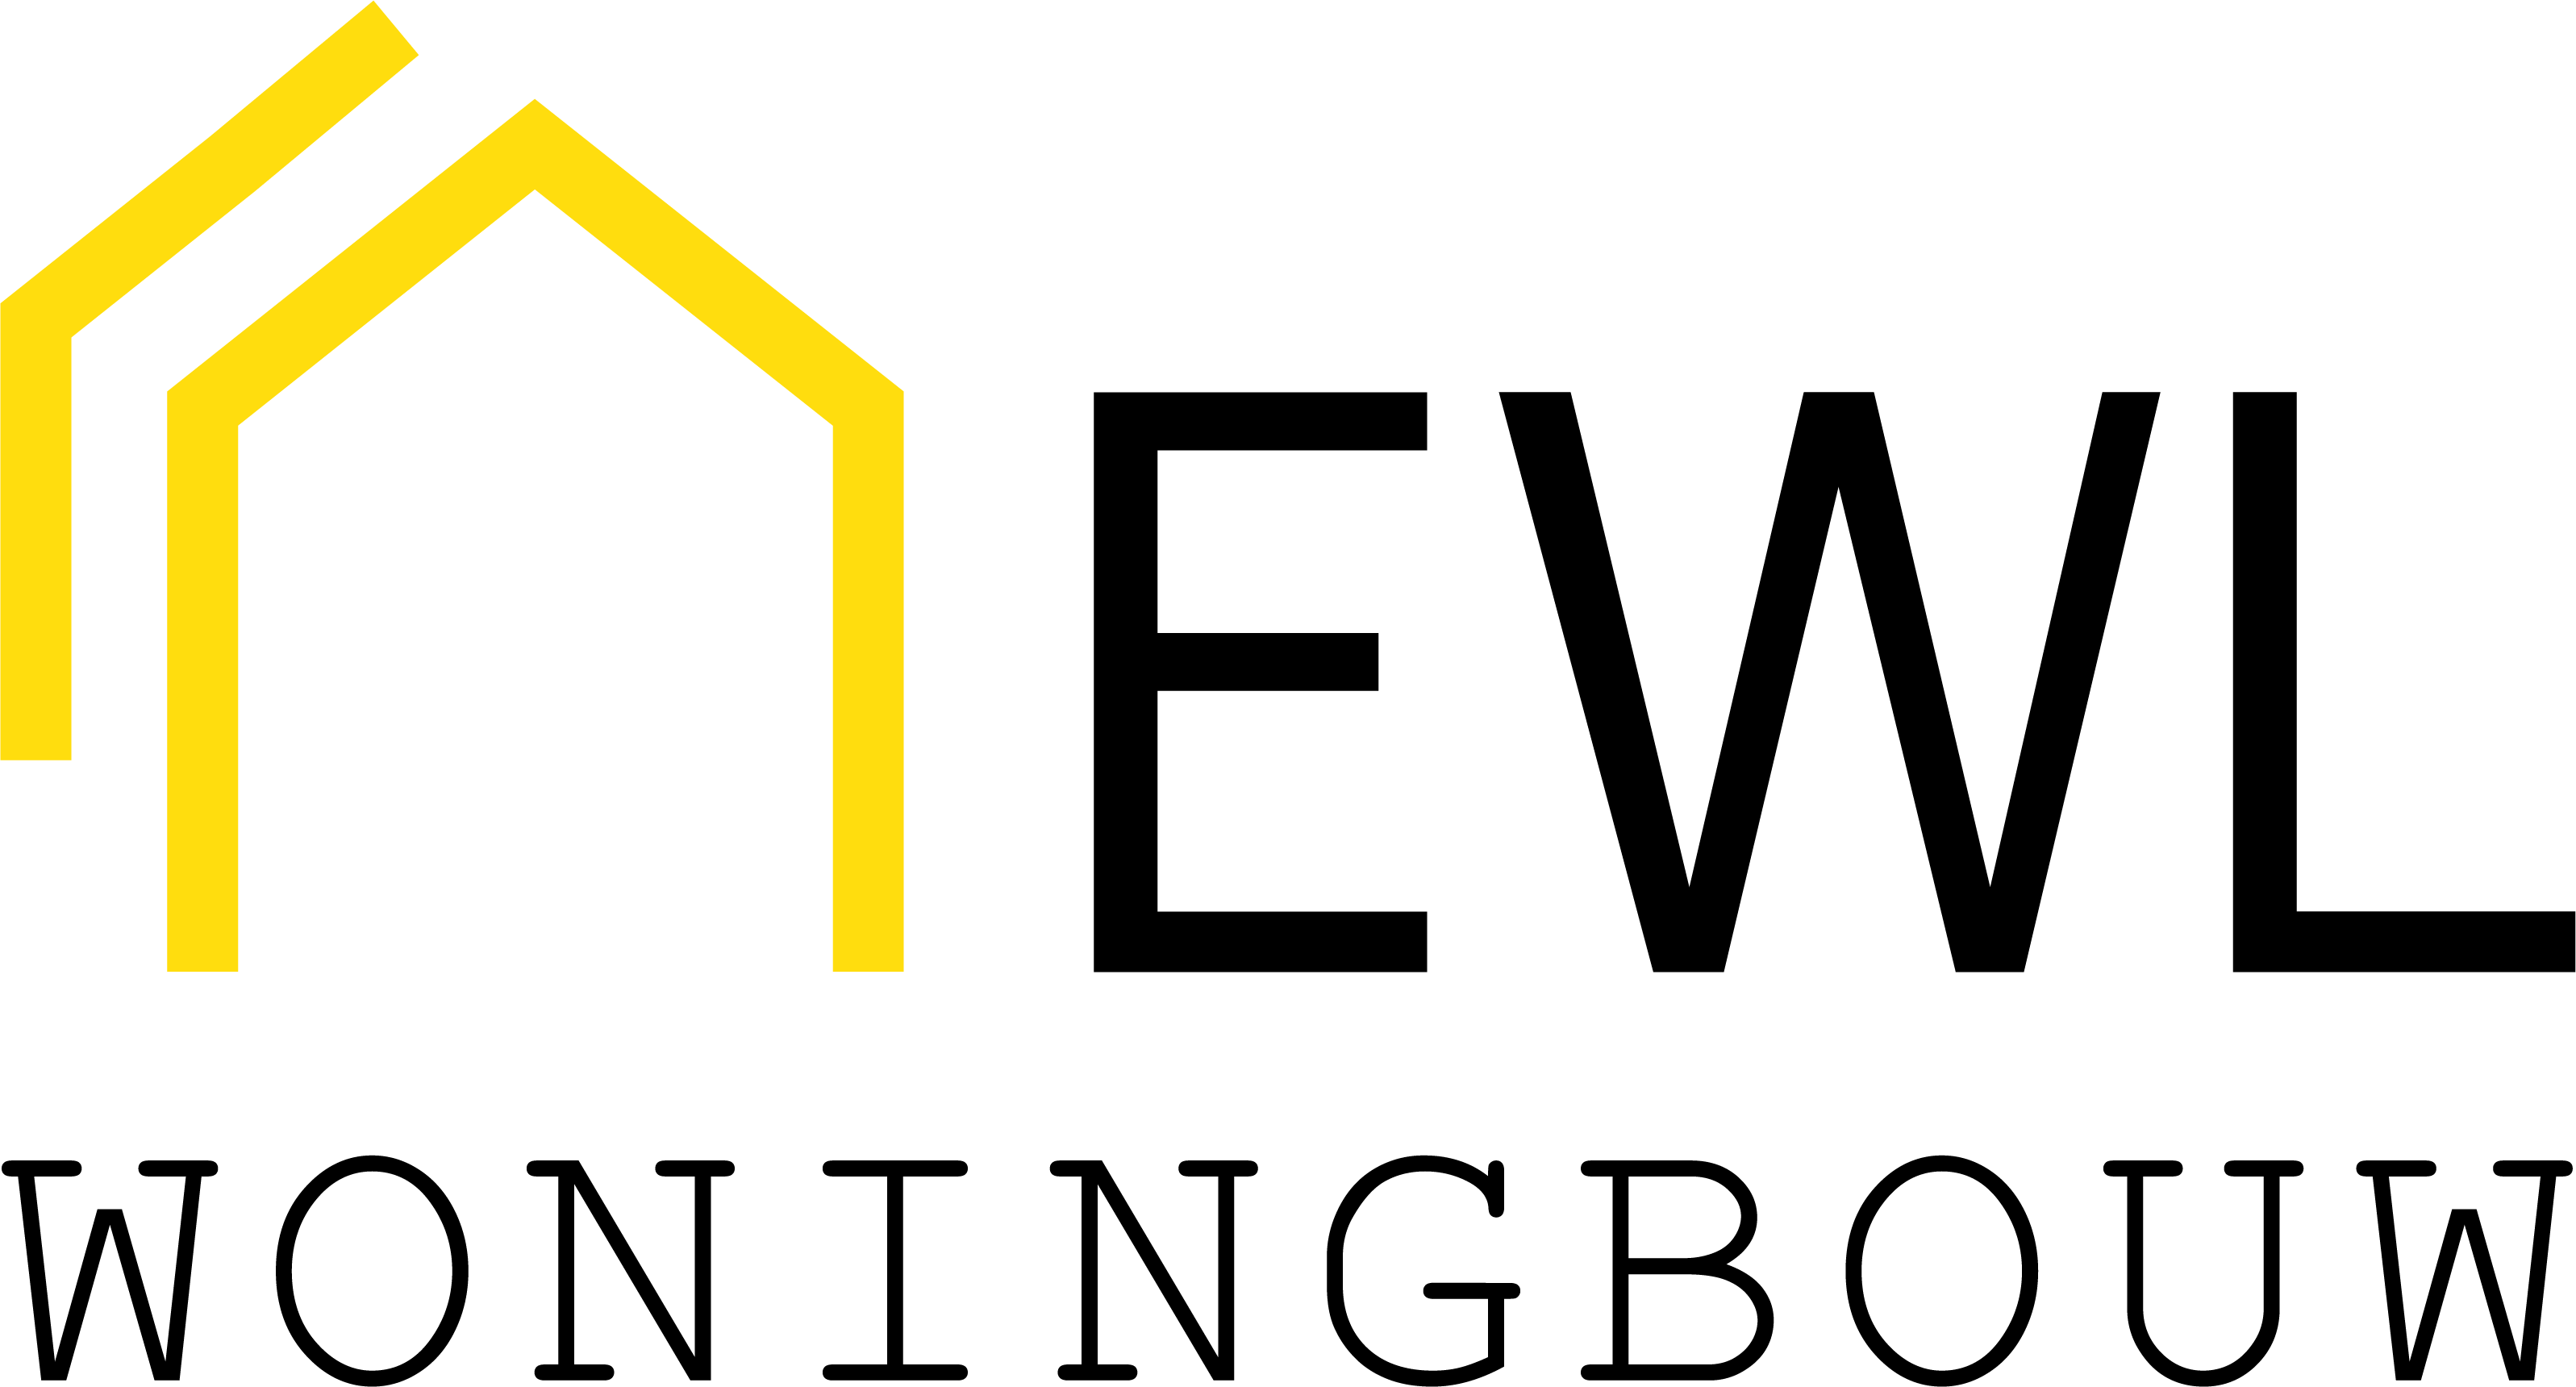 Logo EWL bv woningbouw en renovatie